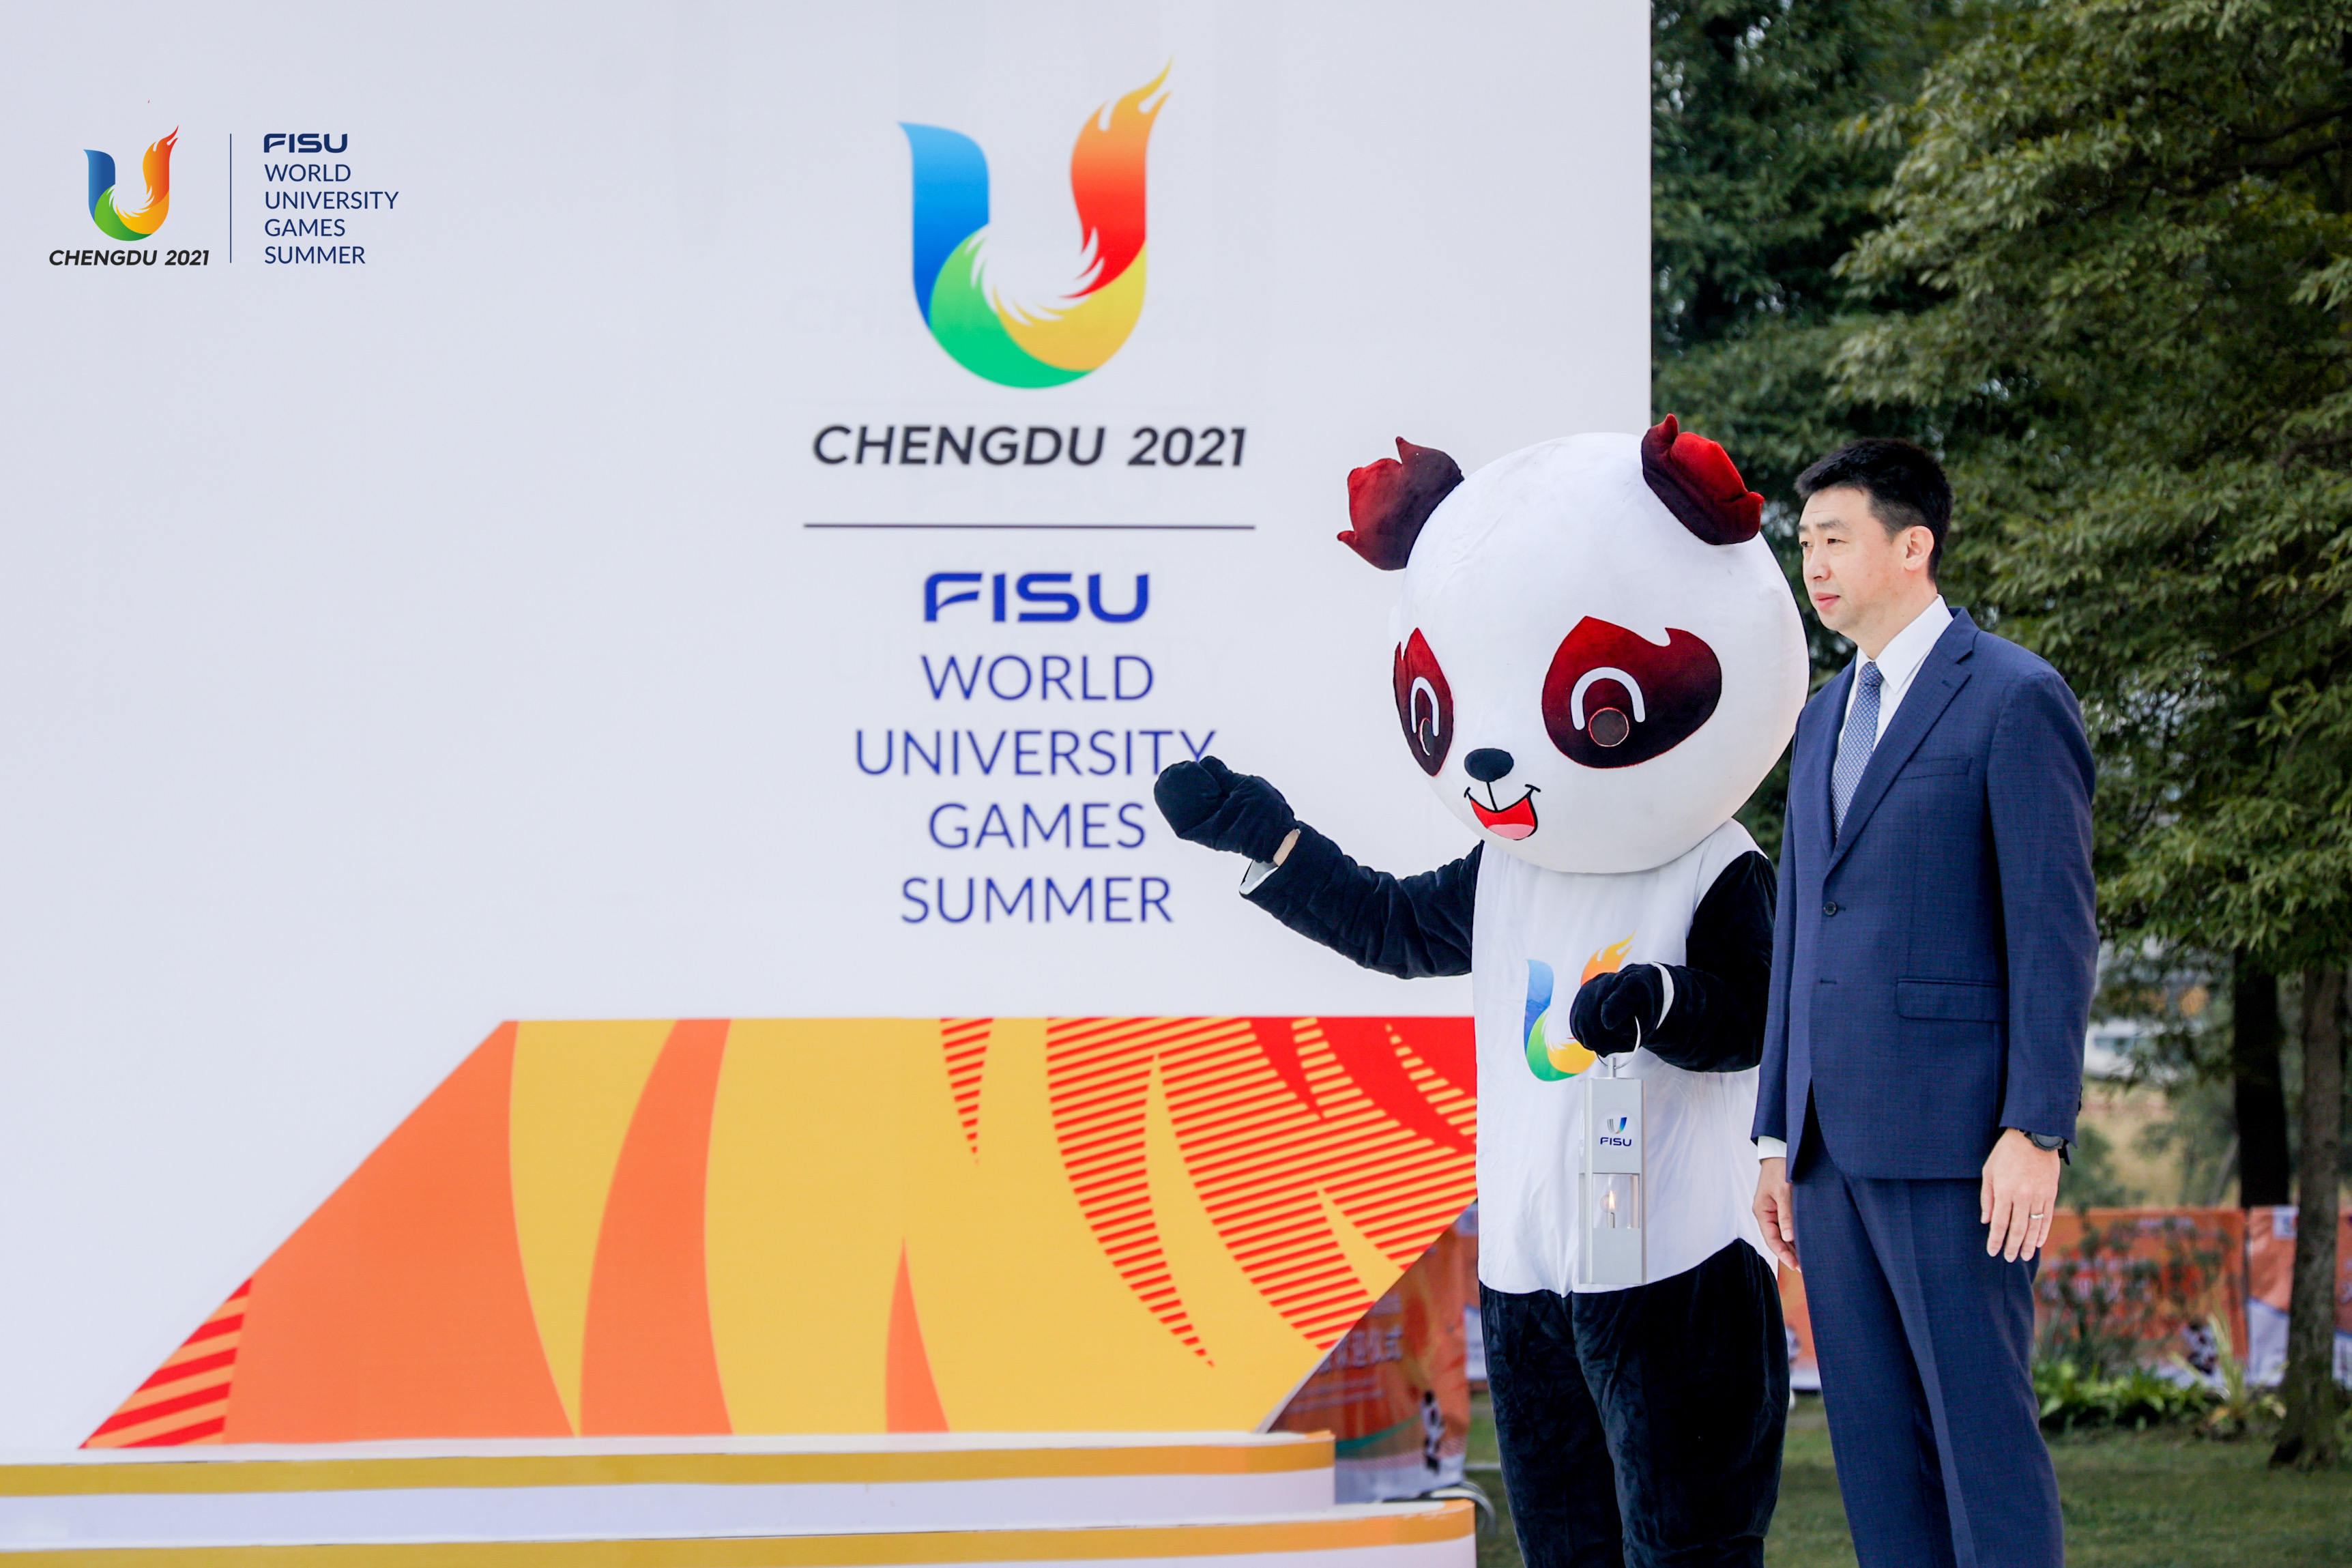 FISU World University Games Chengdu